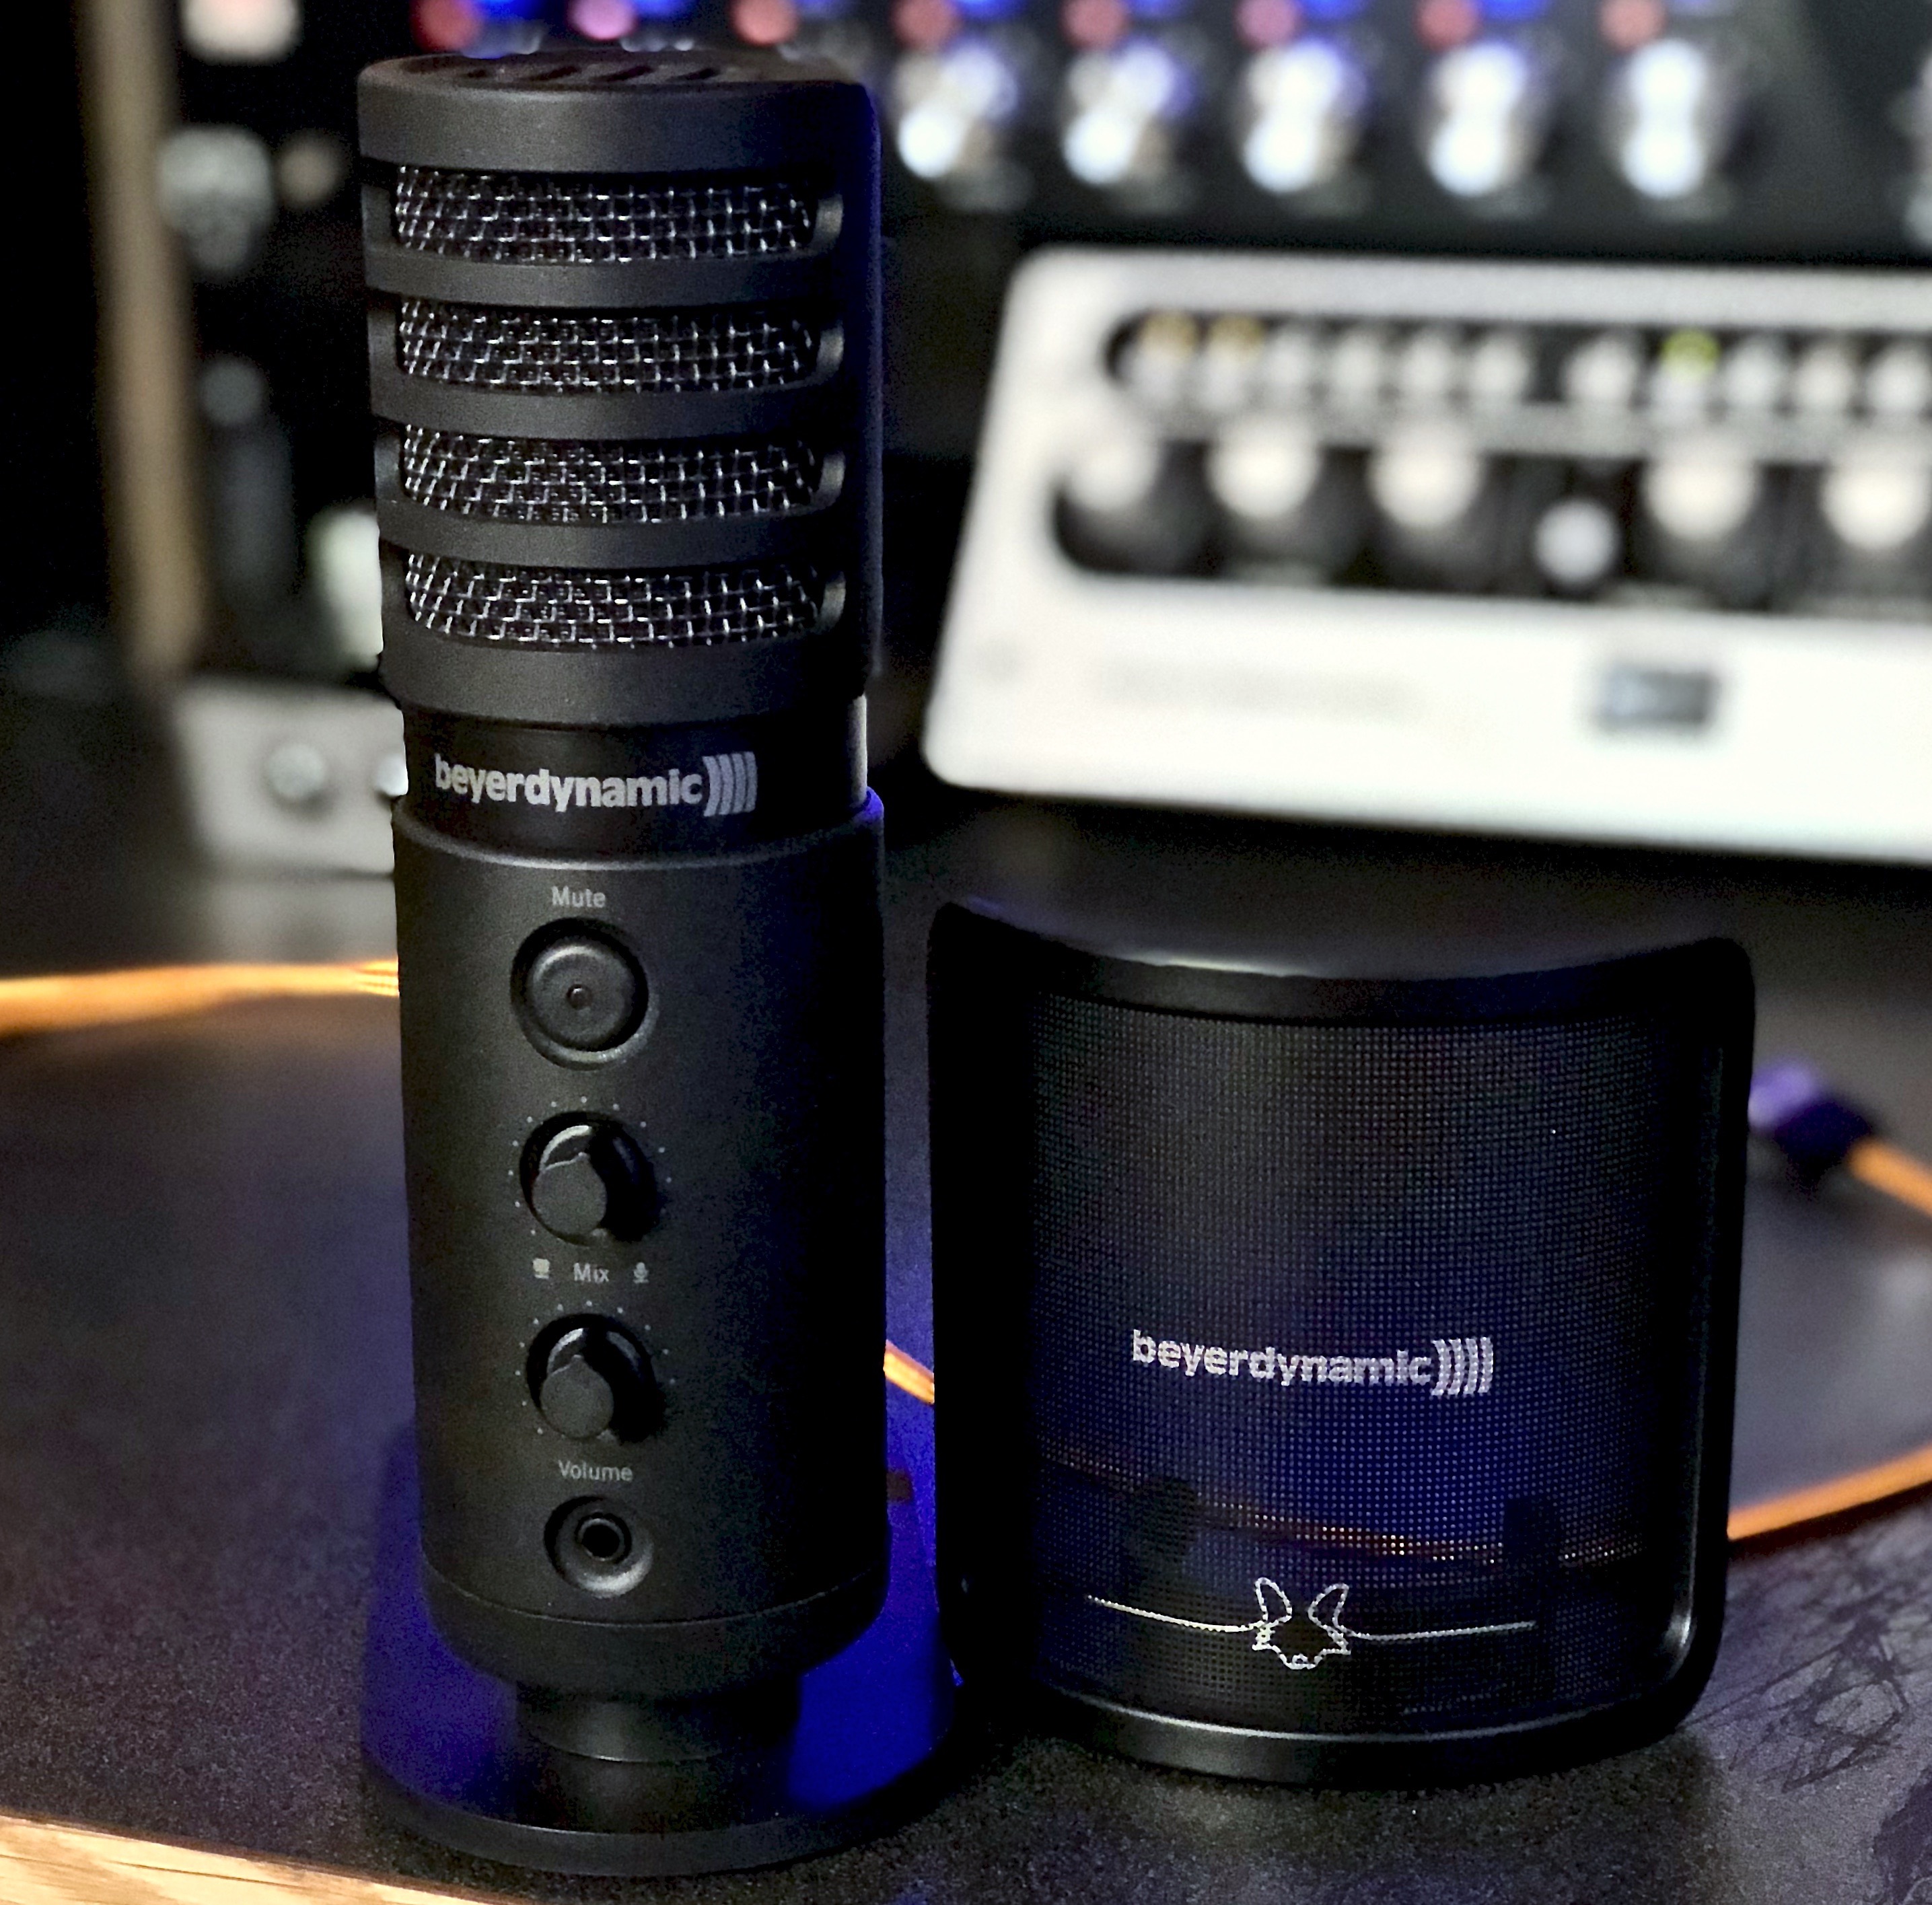 The beyerdynamic FOX USB mic and pop filter.